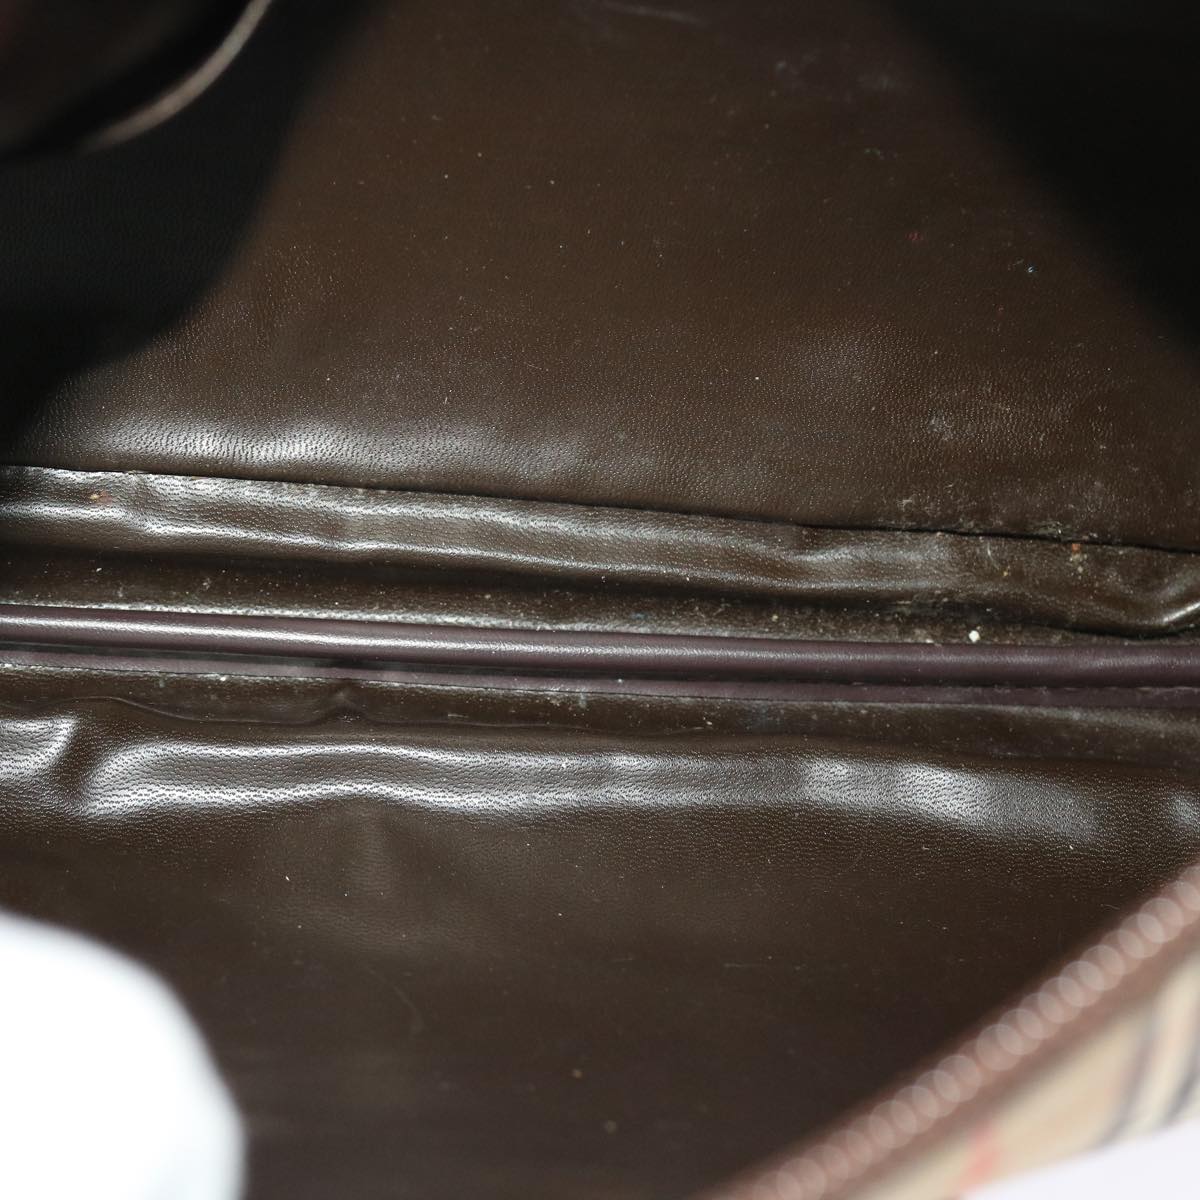 Burberrys Nova Check Clutch Bag Canvas Leather Beige Brown Auth 49771